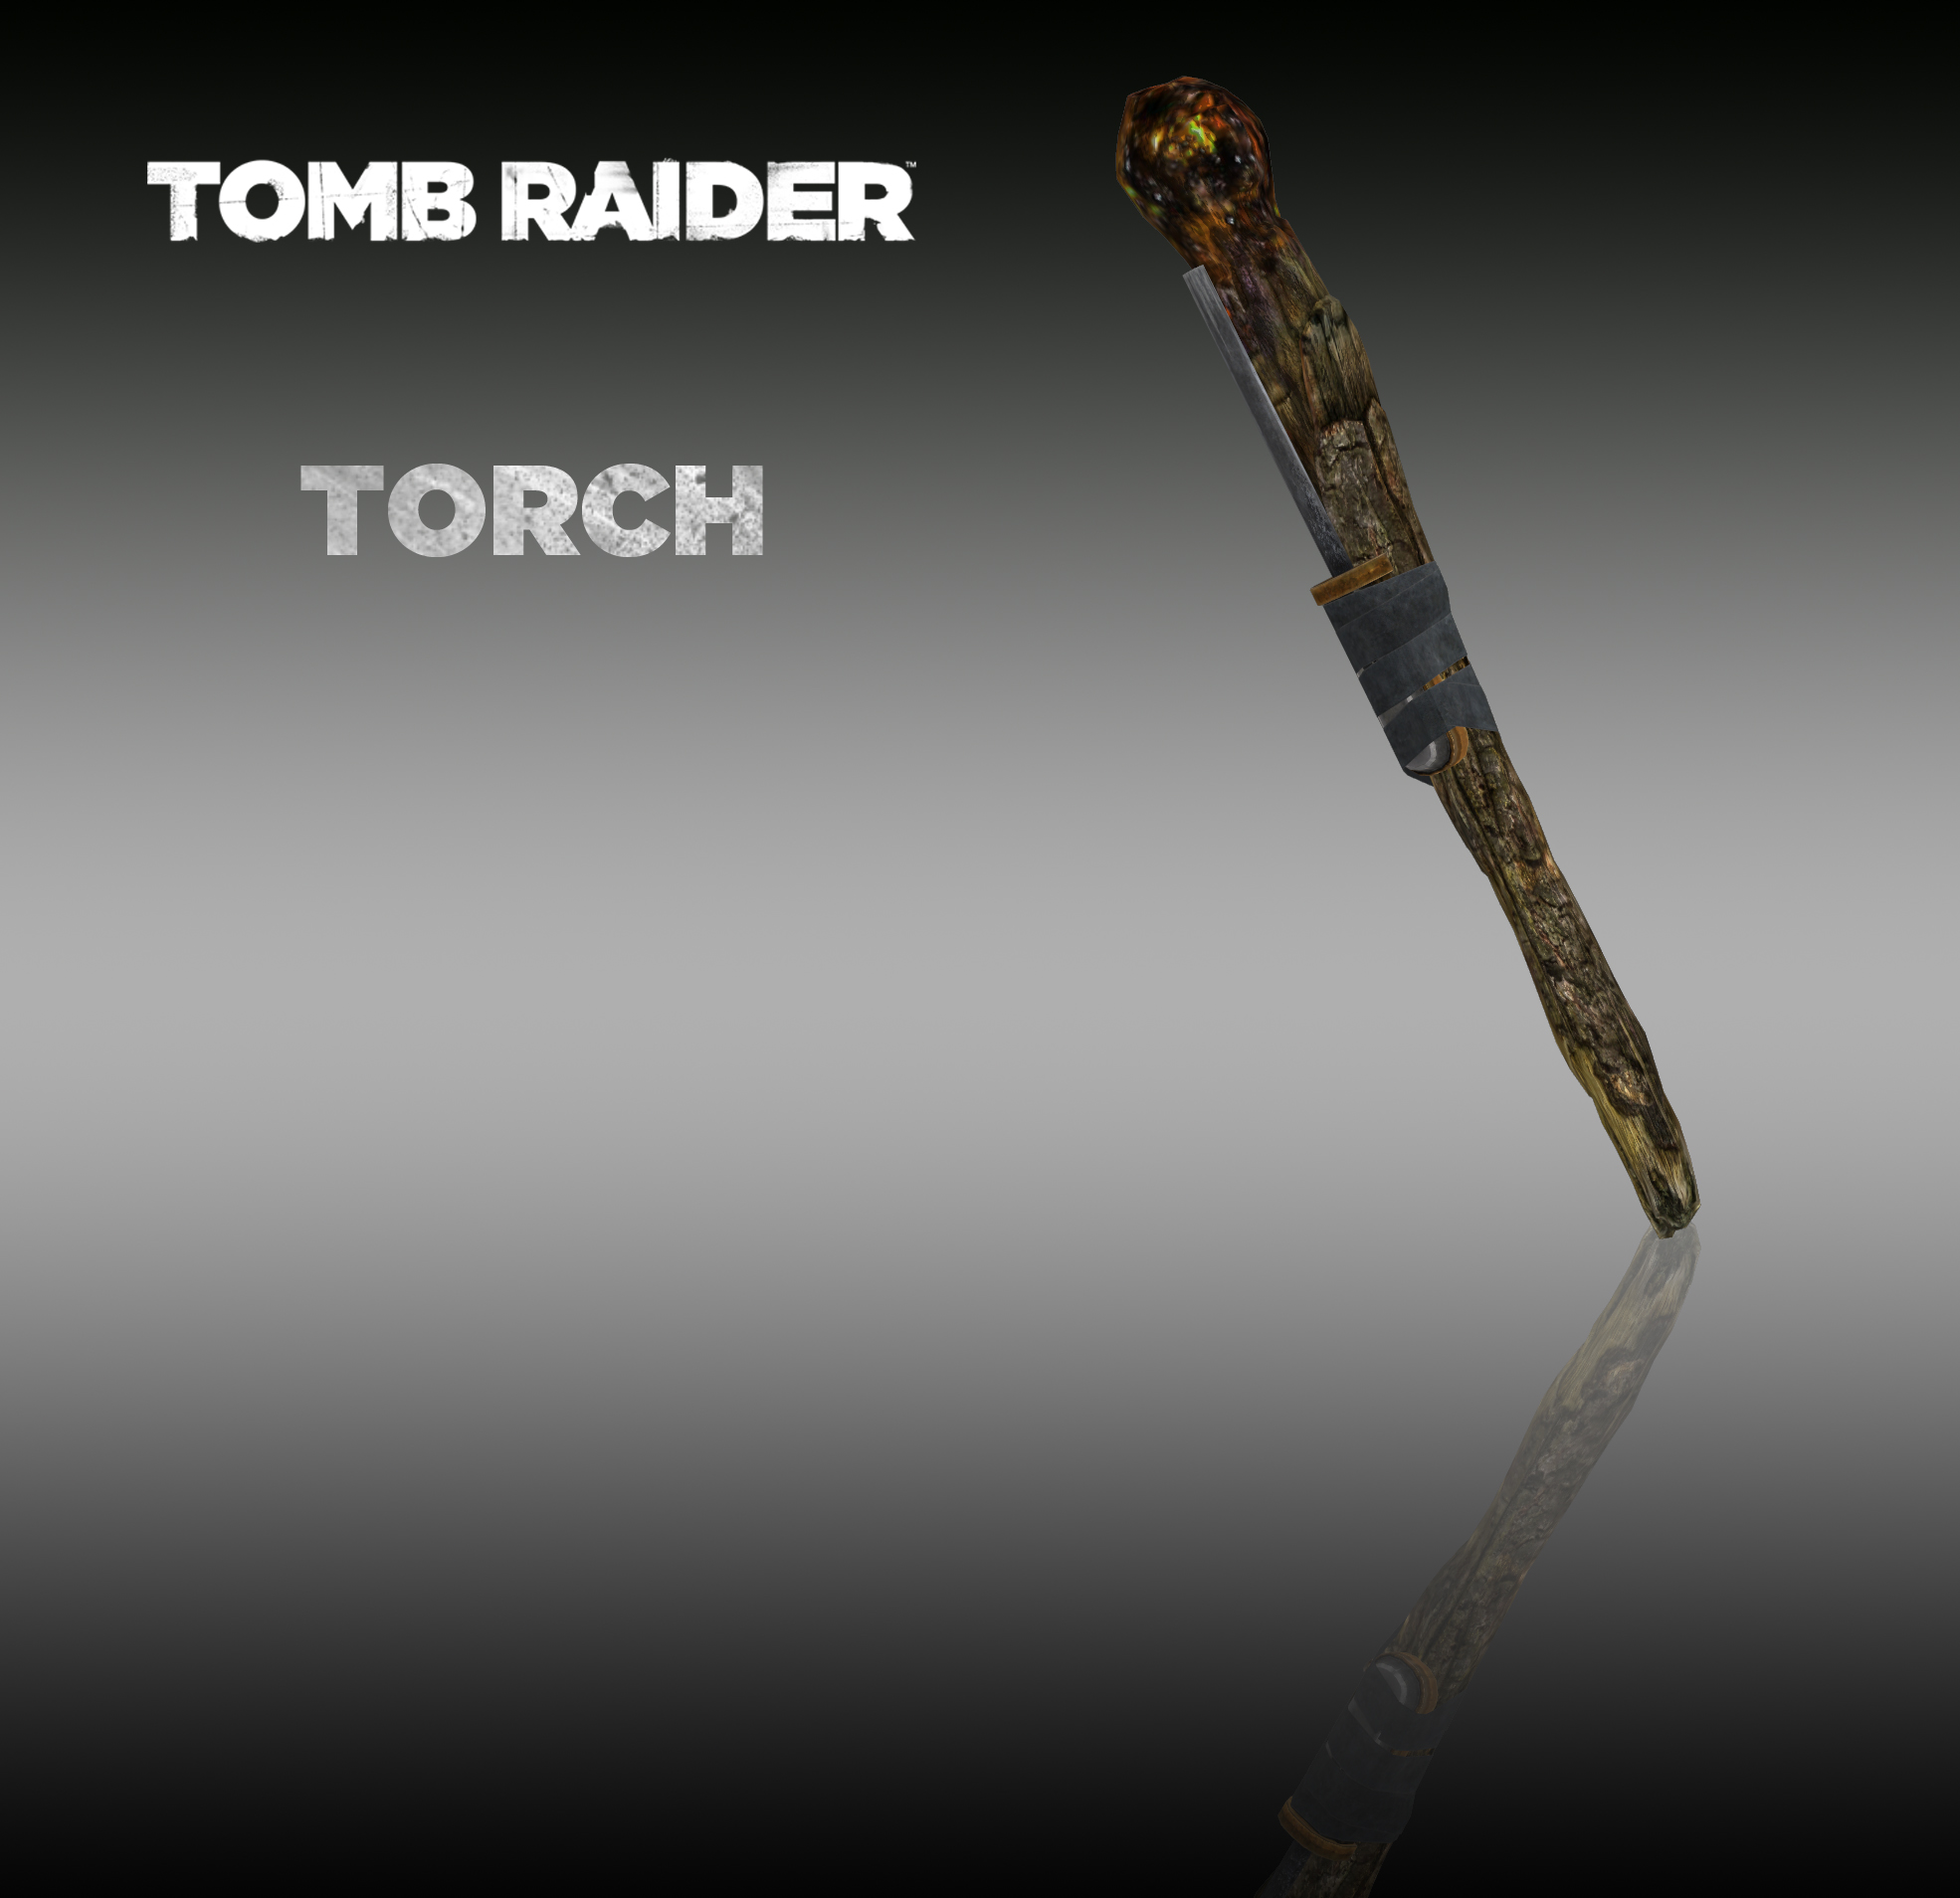 TOMB RAIDER: Torch